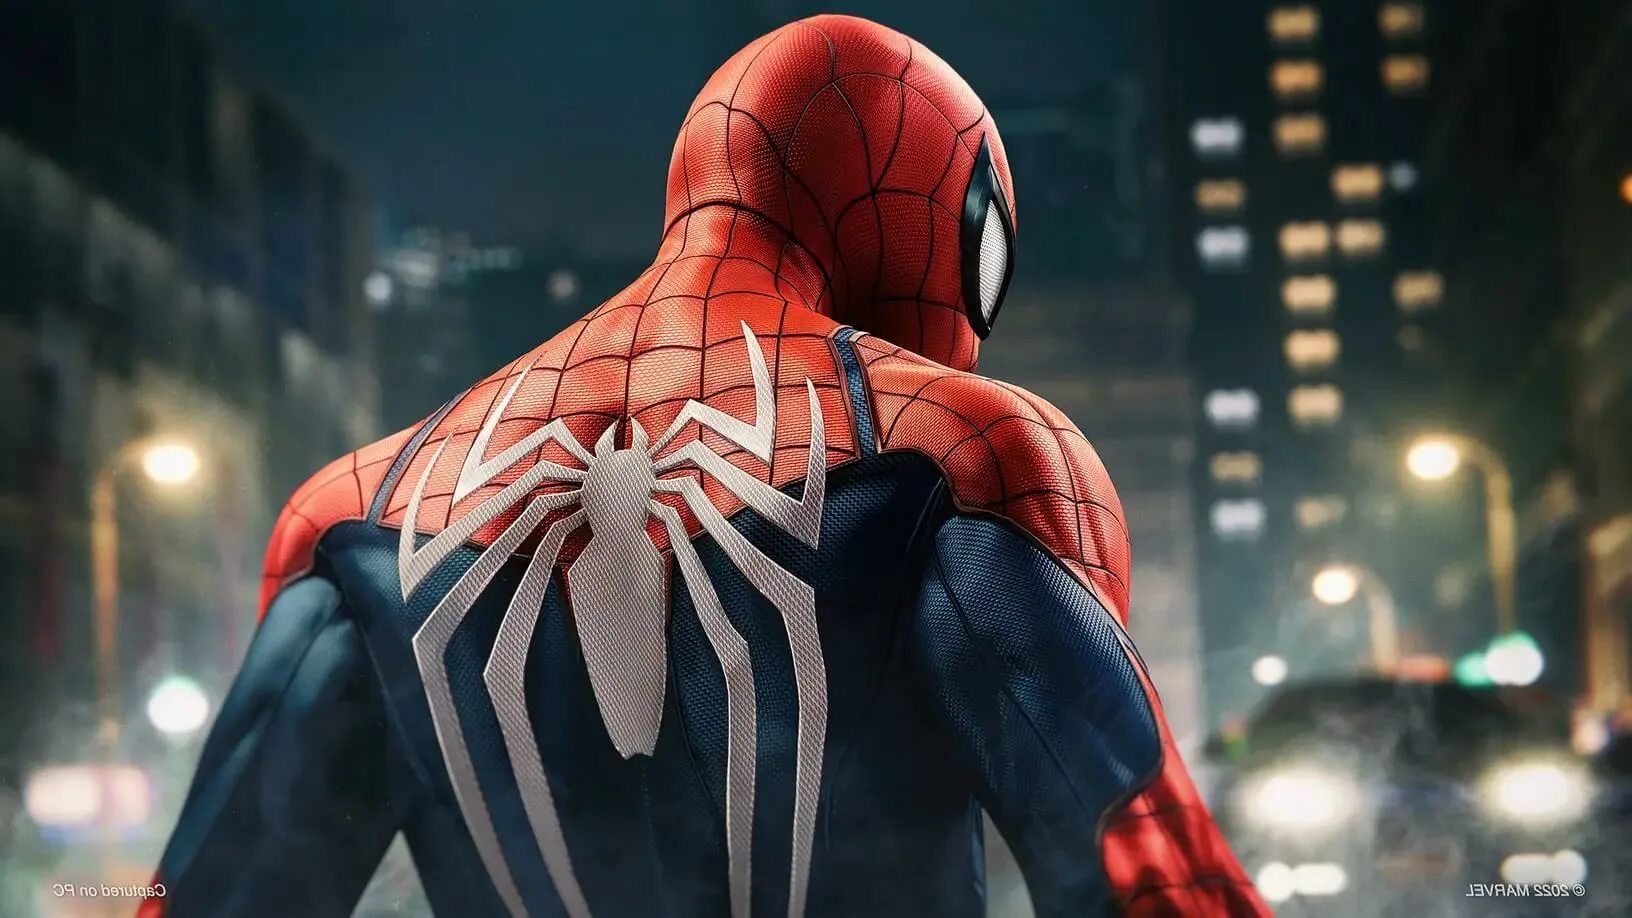 Marvel s spider man. Spider man Remastered 2022. Spider man 2022 на ПК. Marvel Spider man на ПК. Человек паук выйдет на ПК.